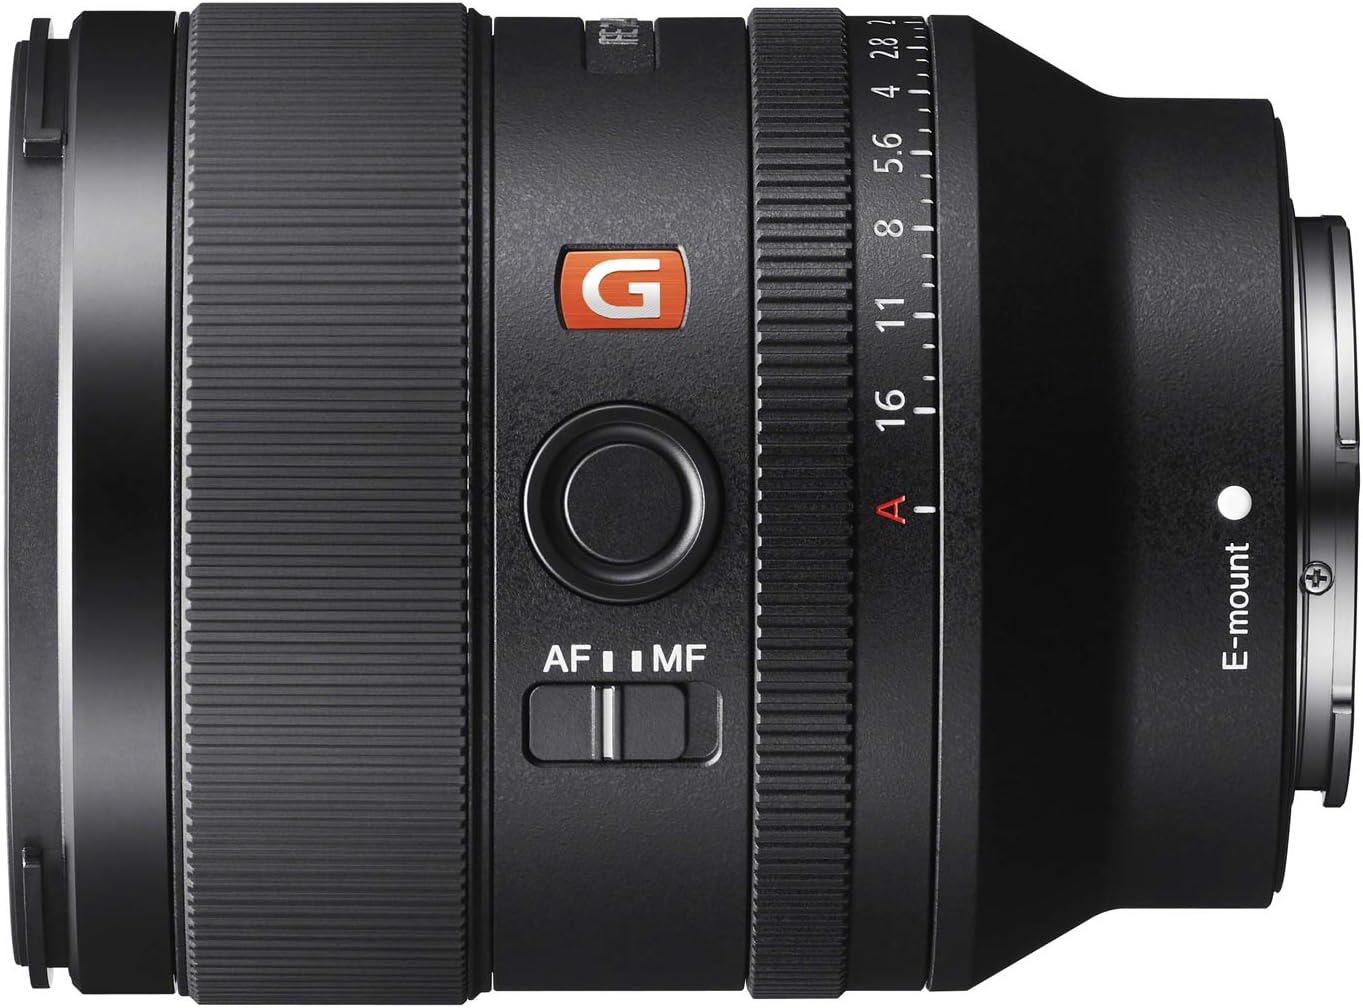 Sony FE 35mm F1.4 GM Full-Frame Large-Aperture Wide Angle G Master Lens Black - $840